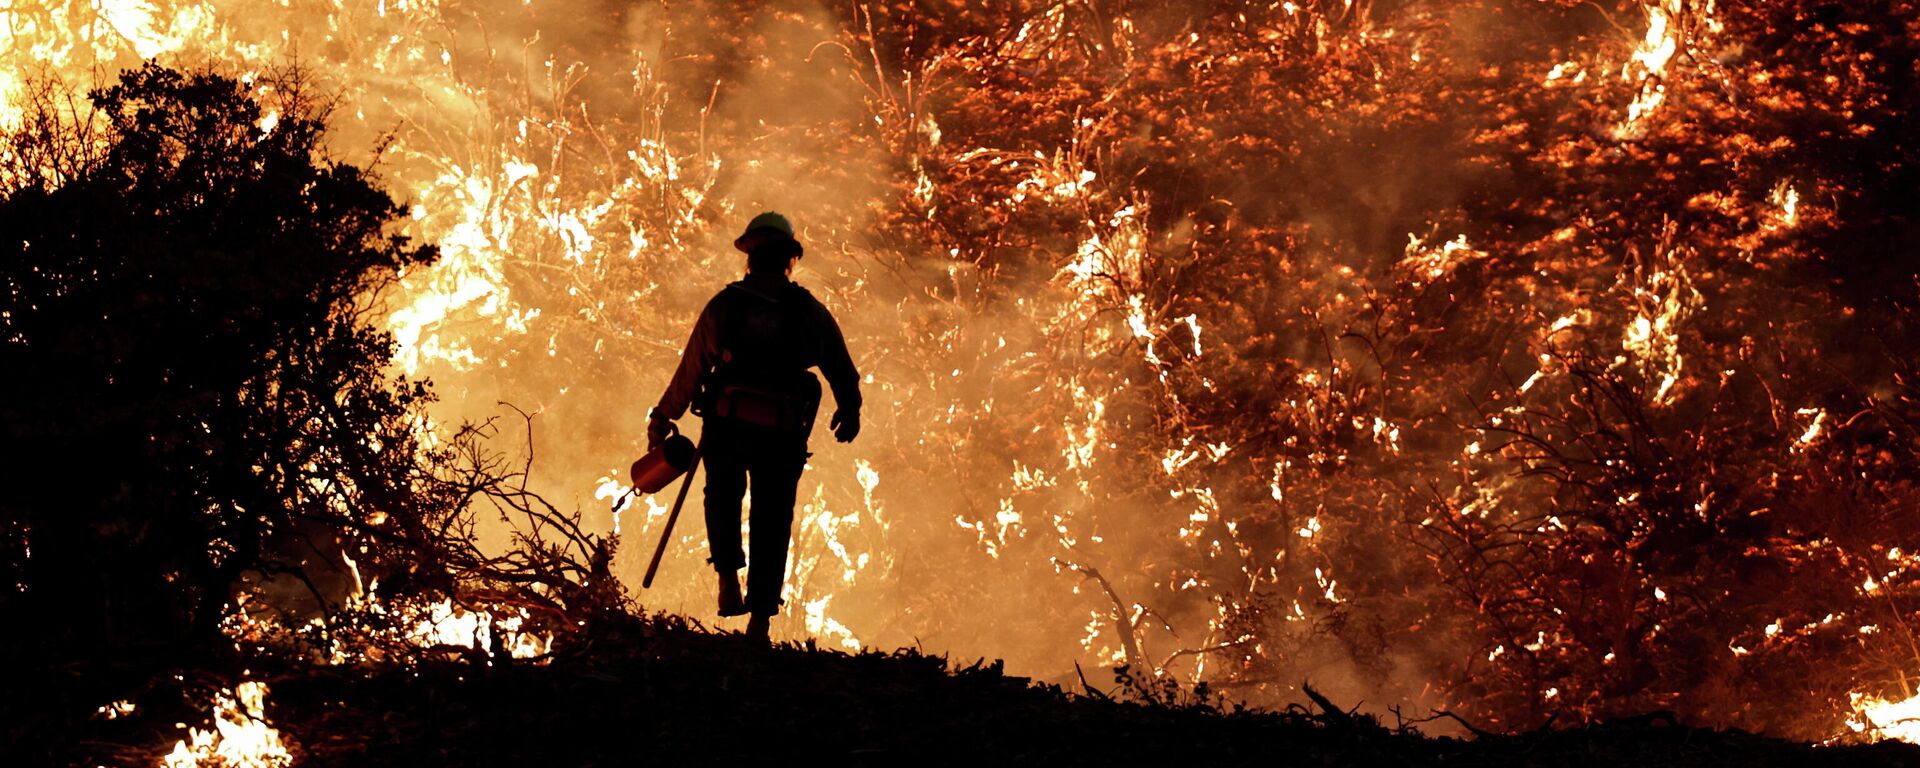 Vatrogasac tokom gašenja požara u Kaliforniji - Sputnik Srbija, 1920, 29.08.2021